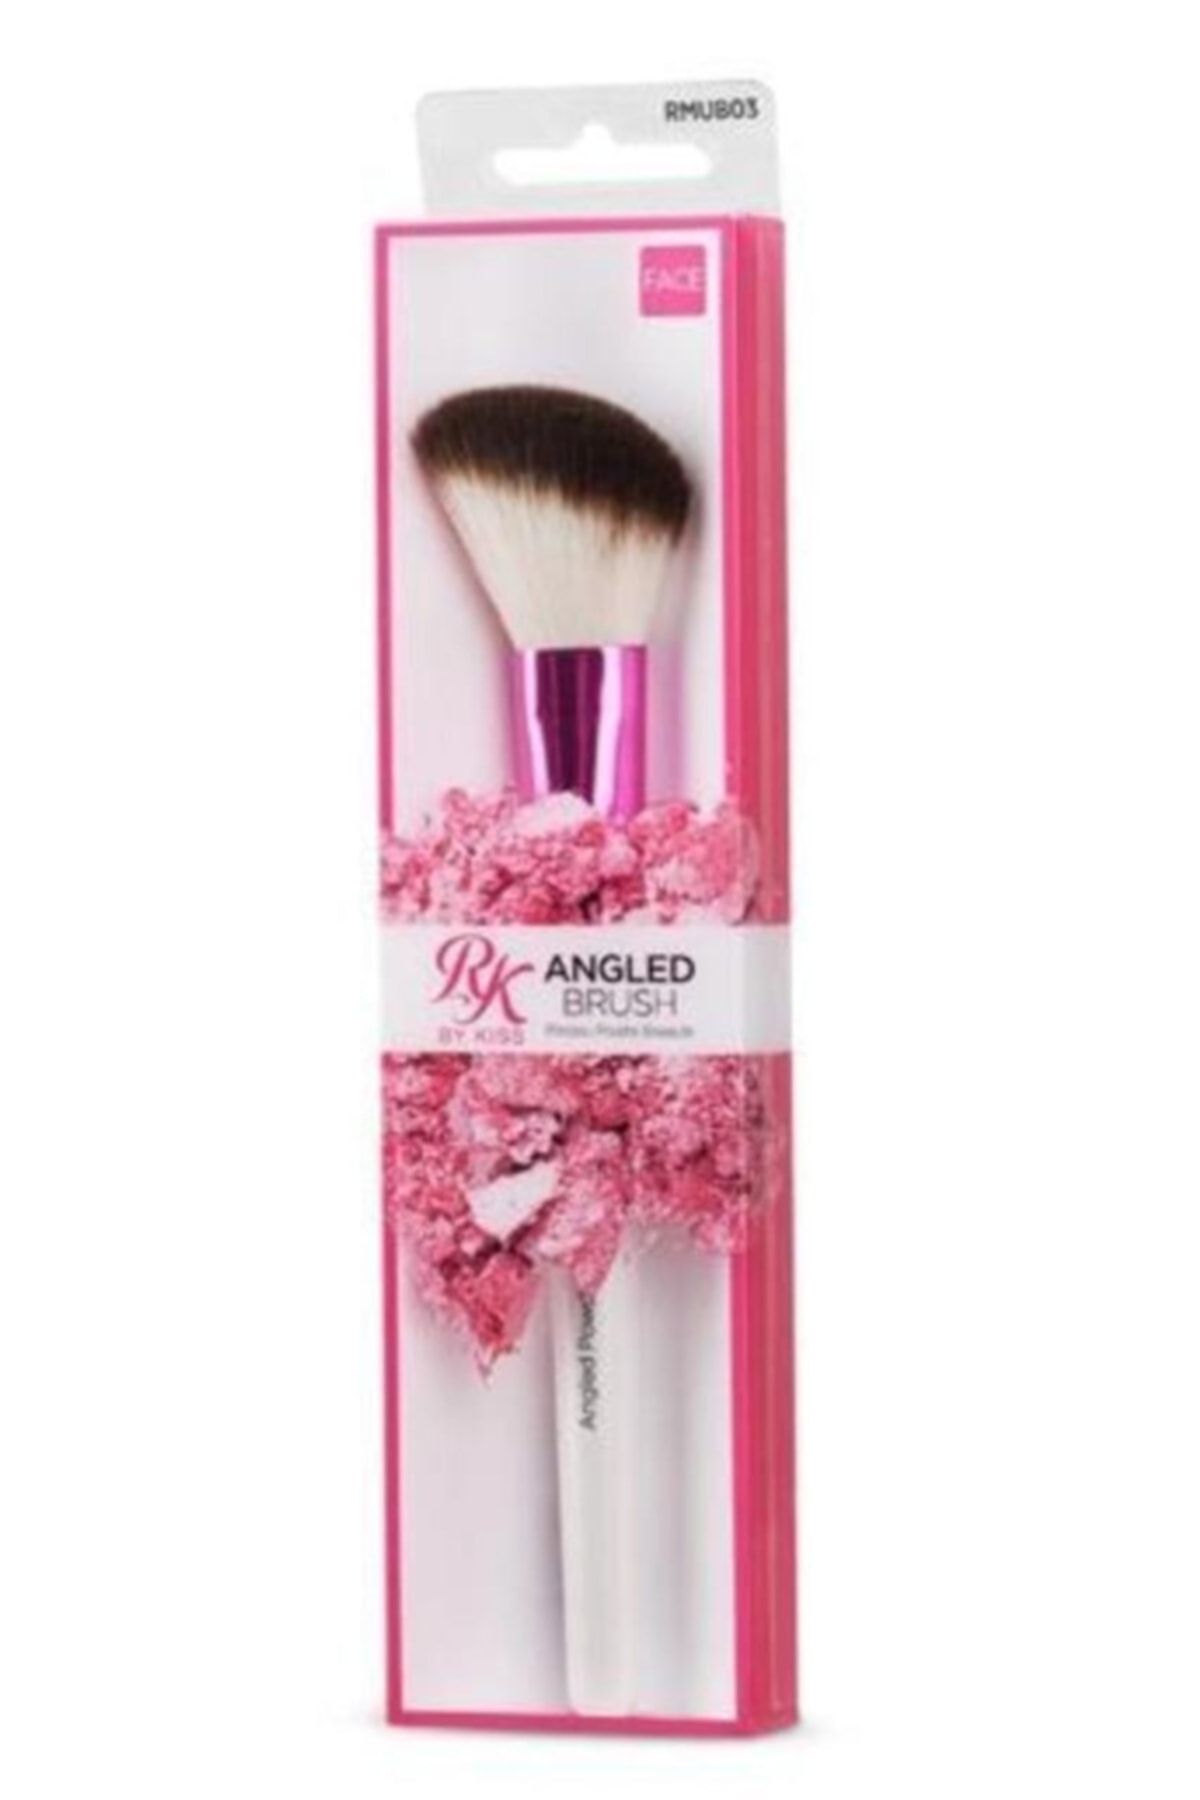 Kiss Rmub03 Makeup Brush Large